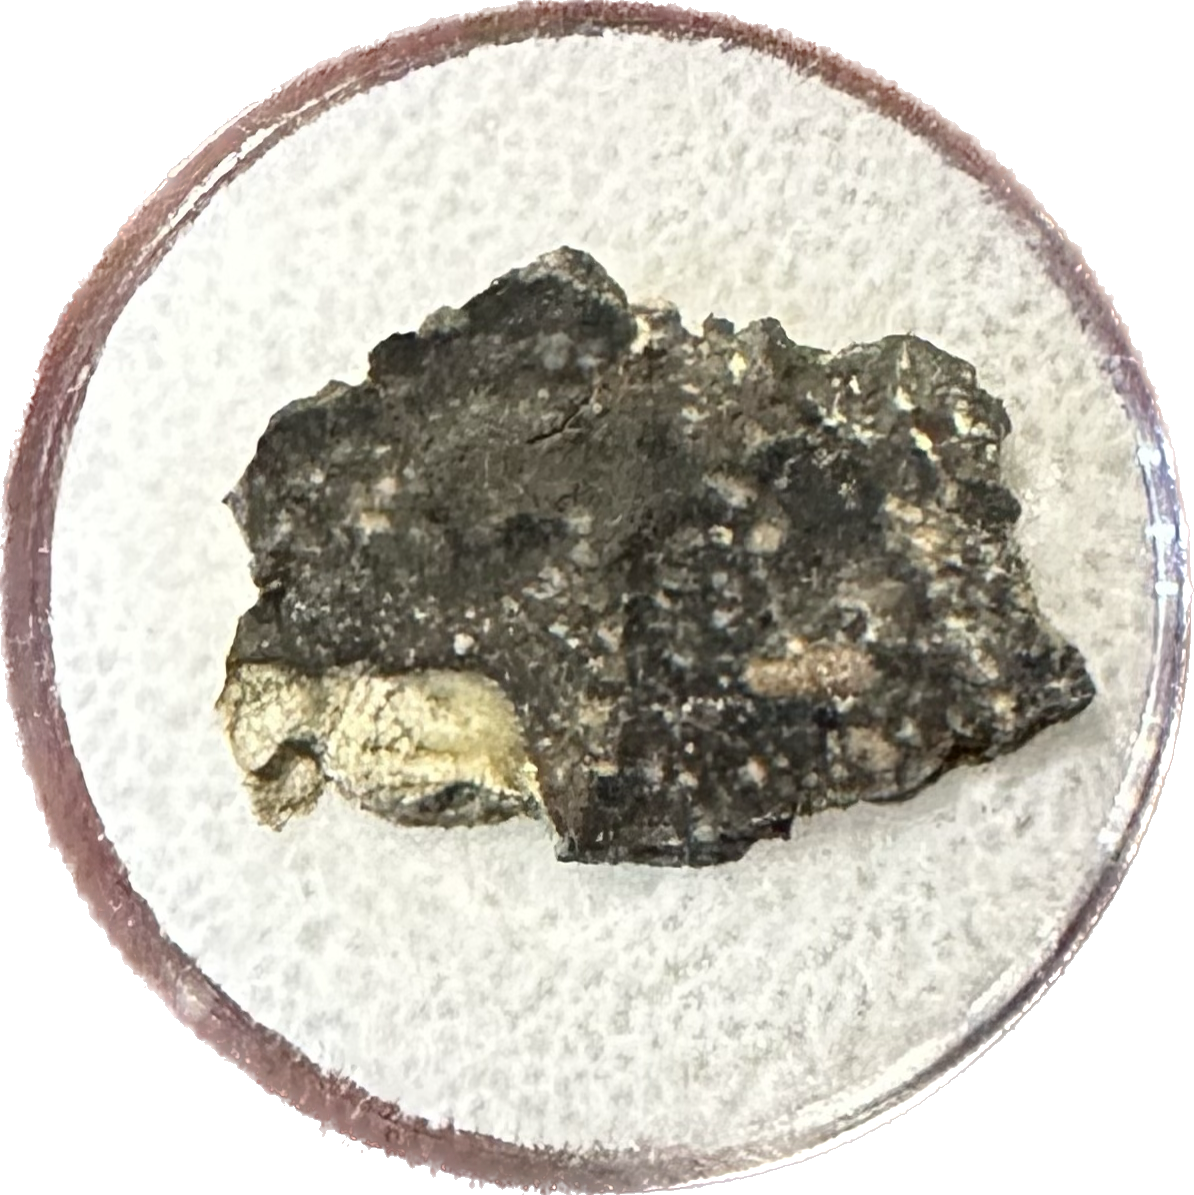 Moon rock, NWA 11428 IMCA registered Prehistoric Online